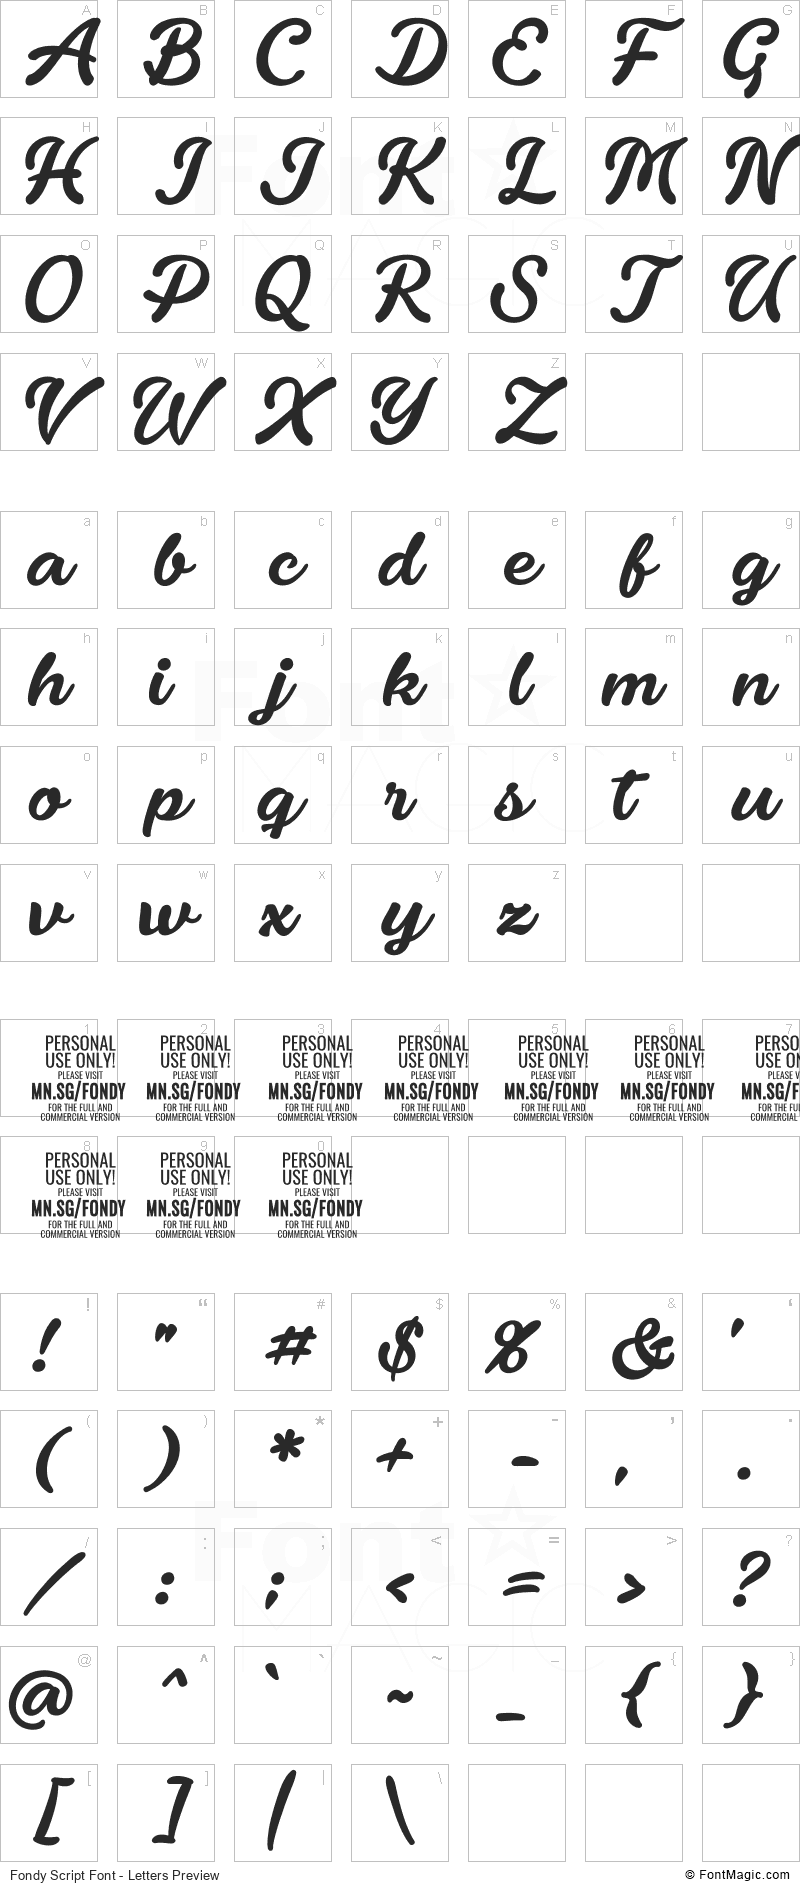 Fondy Script Font - All Latters Preview Chart